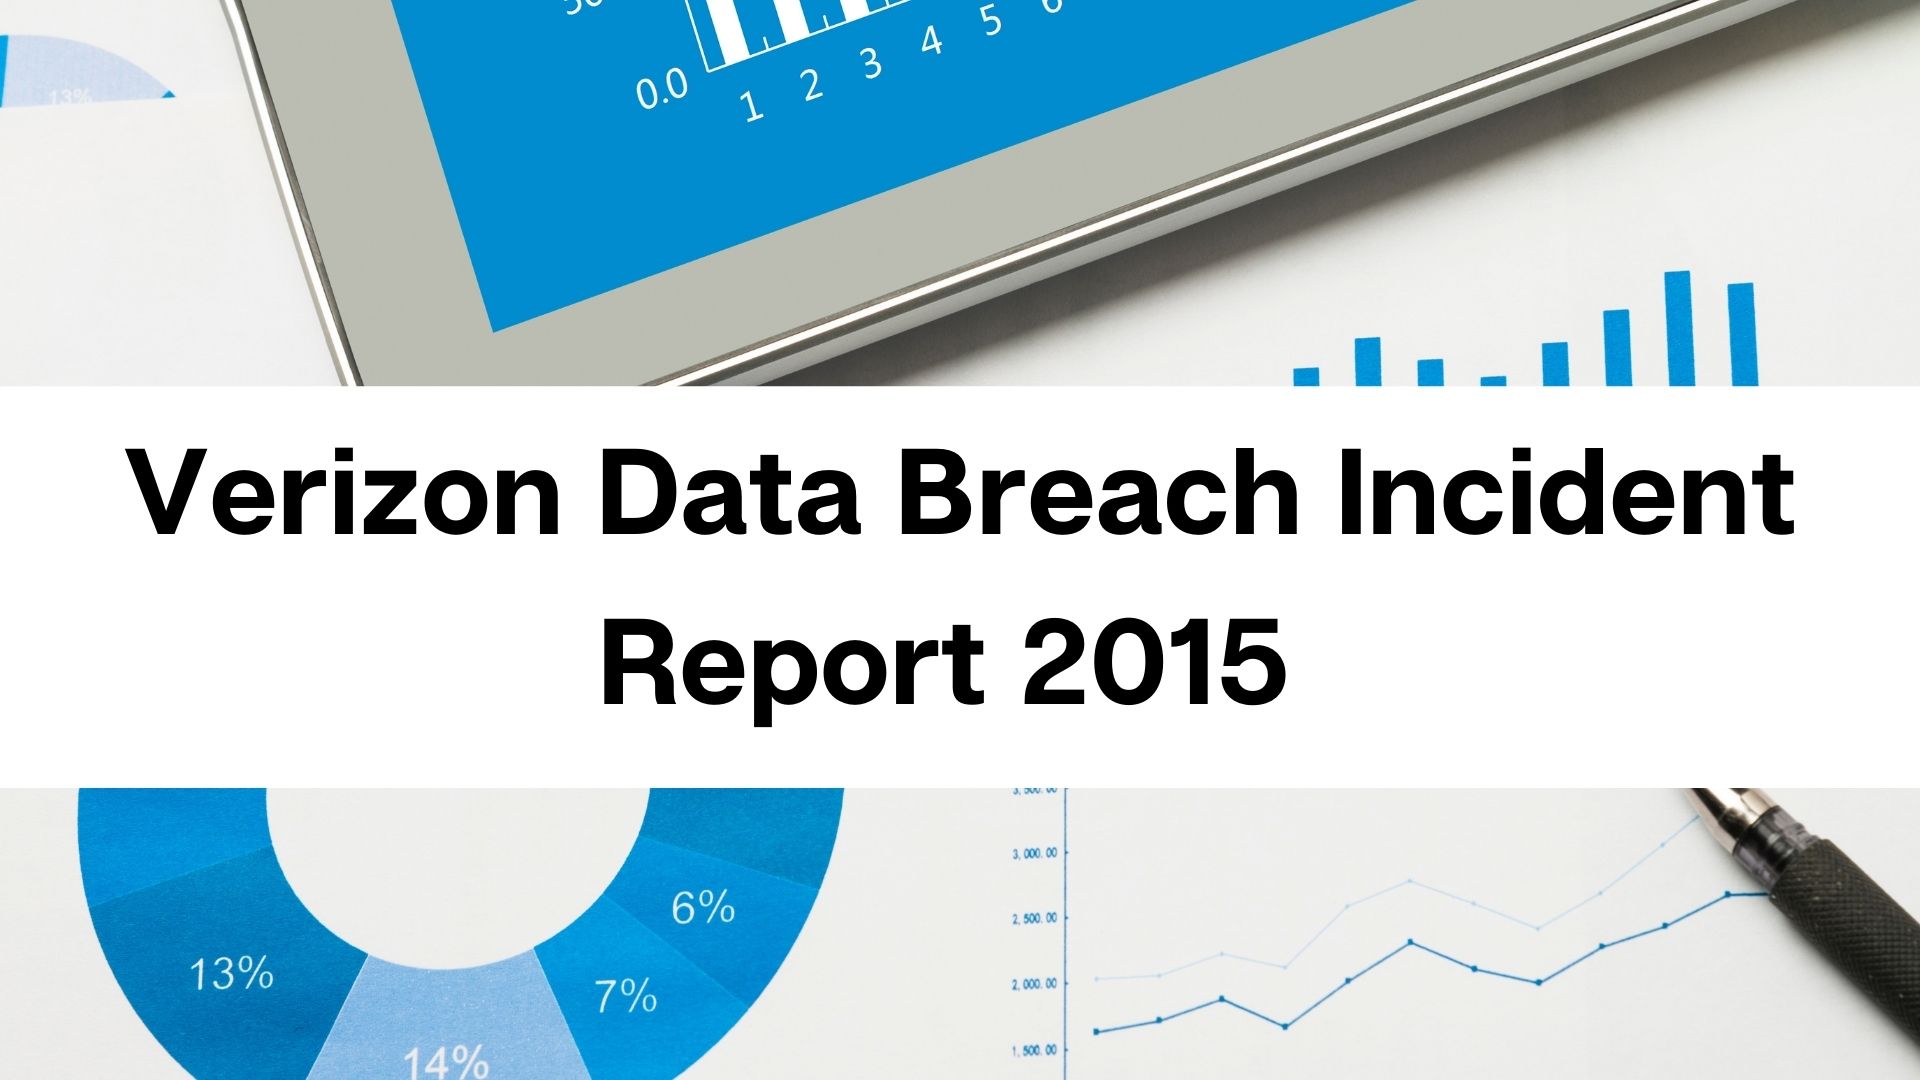 https://www.groundlabs.com/wp-content/uploads/2015/05/Verizon-Data-Breach-Incident-Report-2015.jpg